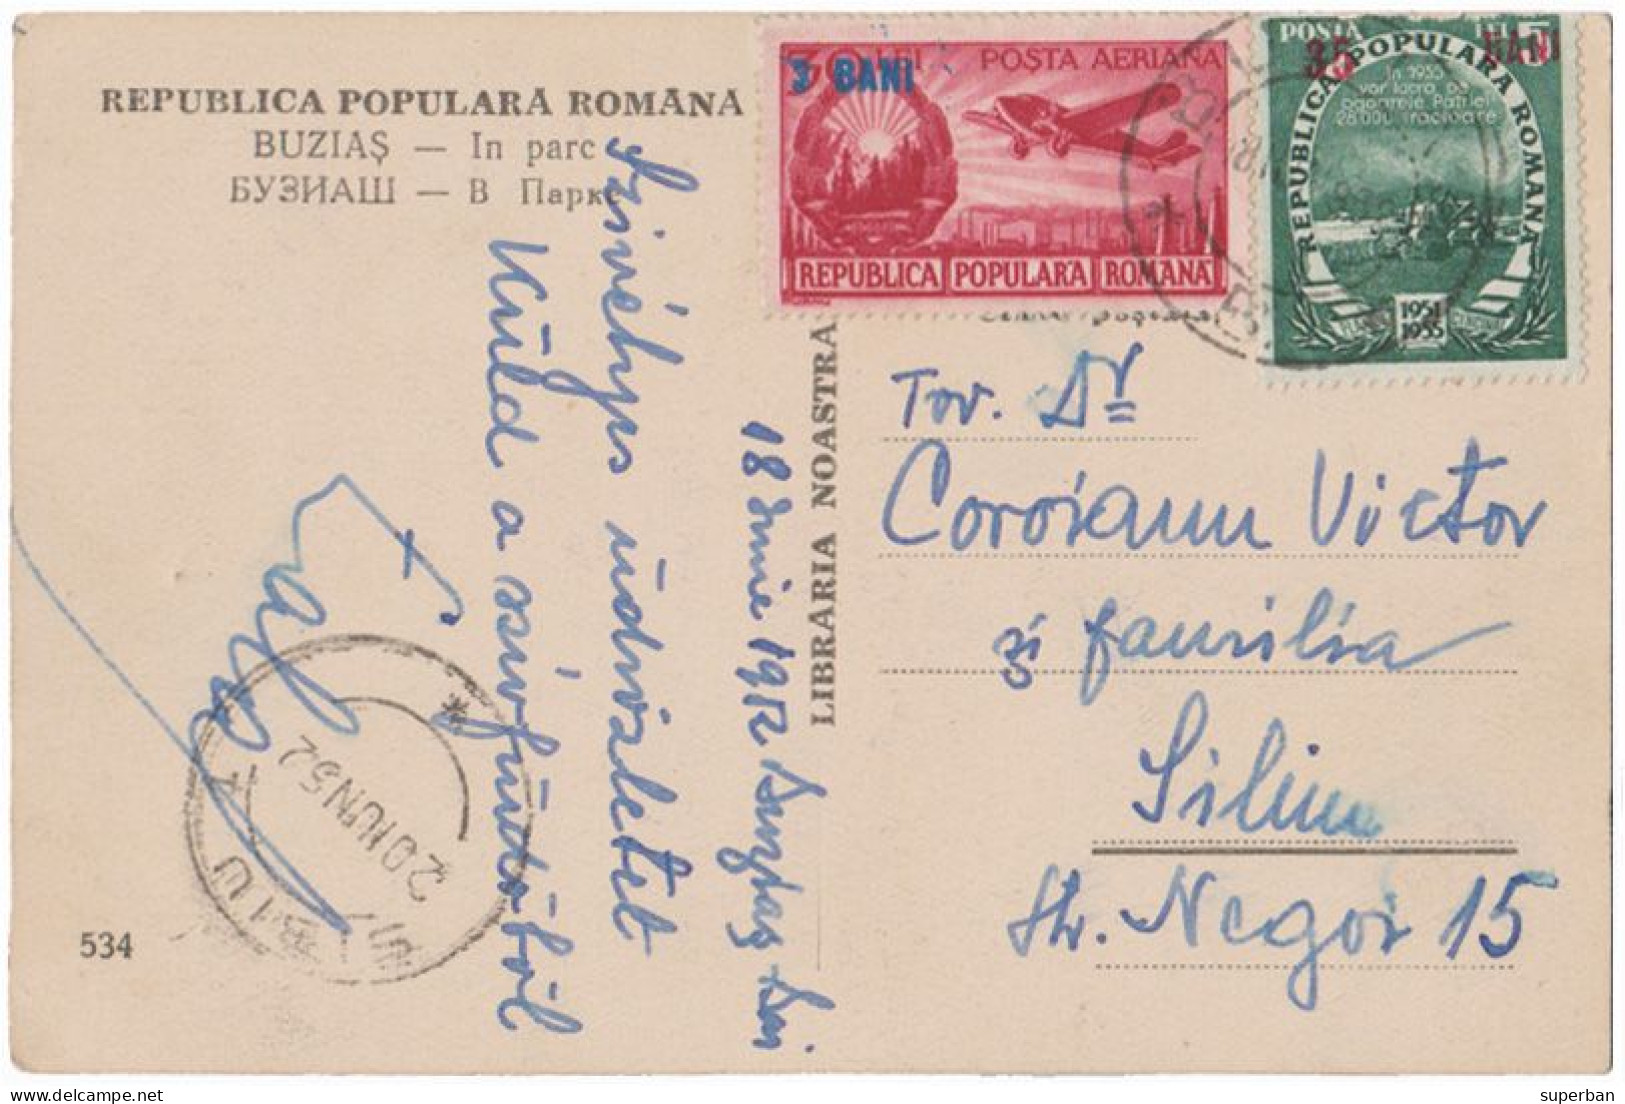 ROMANIA : 1952 - STABILIZAREA MONETARA / MONETARY STABILIZATION - POSTCARD MAILED With OVERPRINTED STAMPS - RRR (an319) - Briefe U. Dokumente